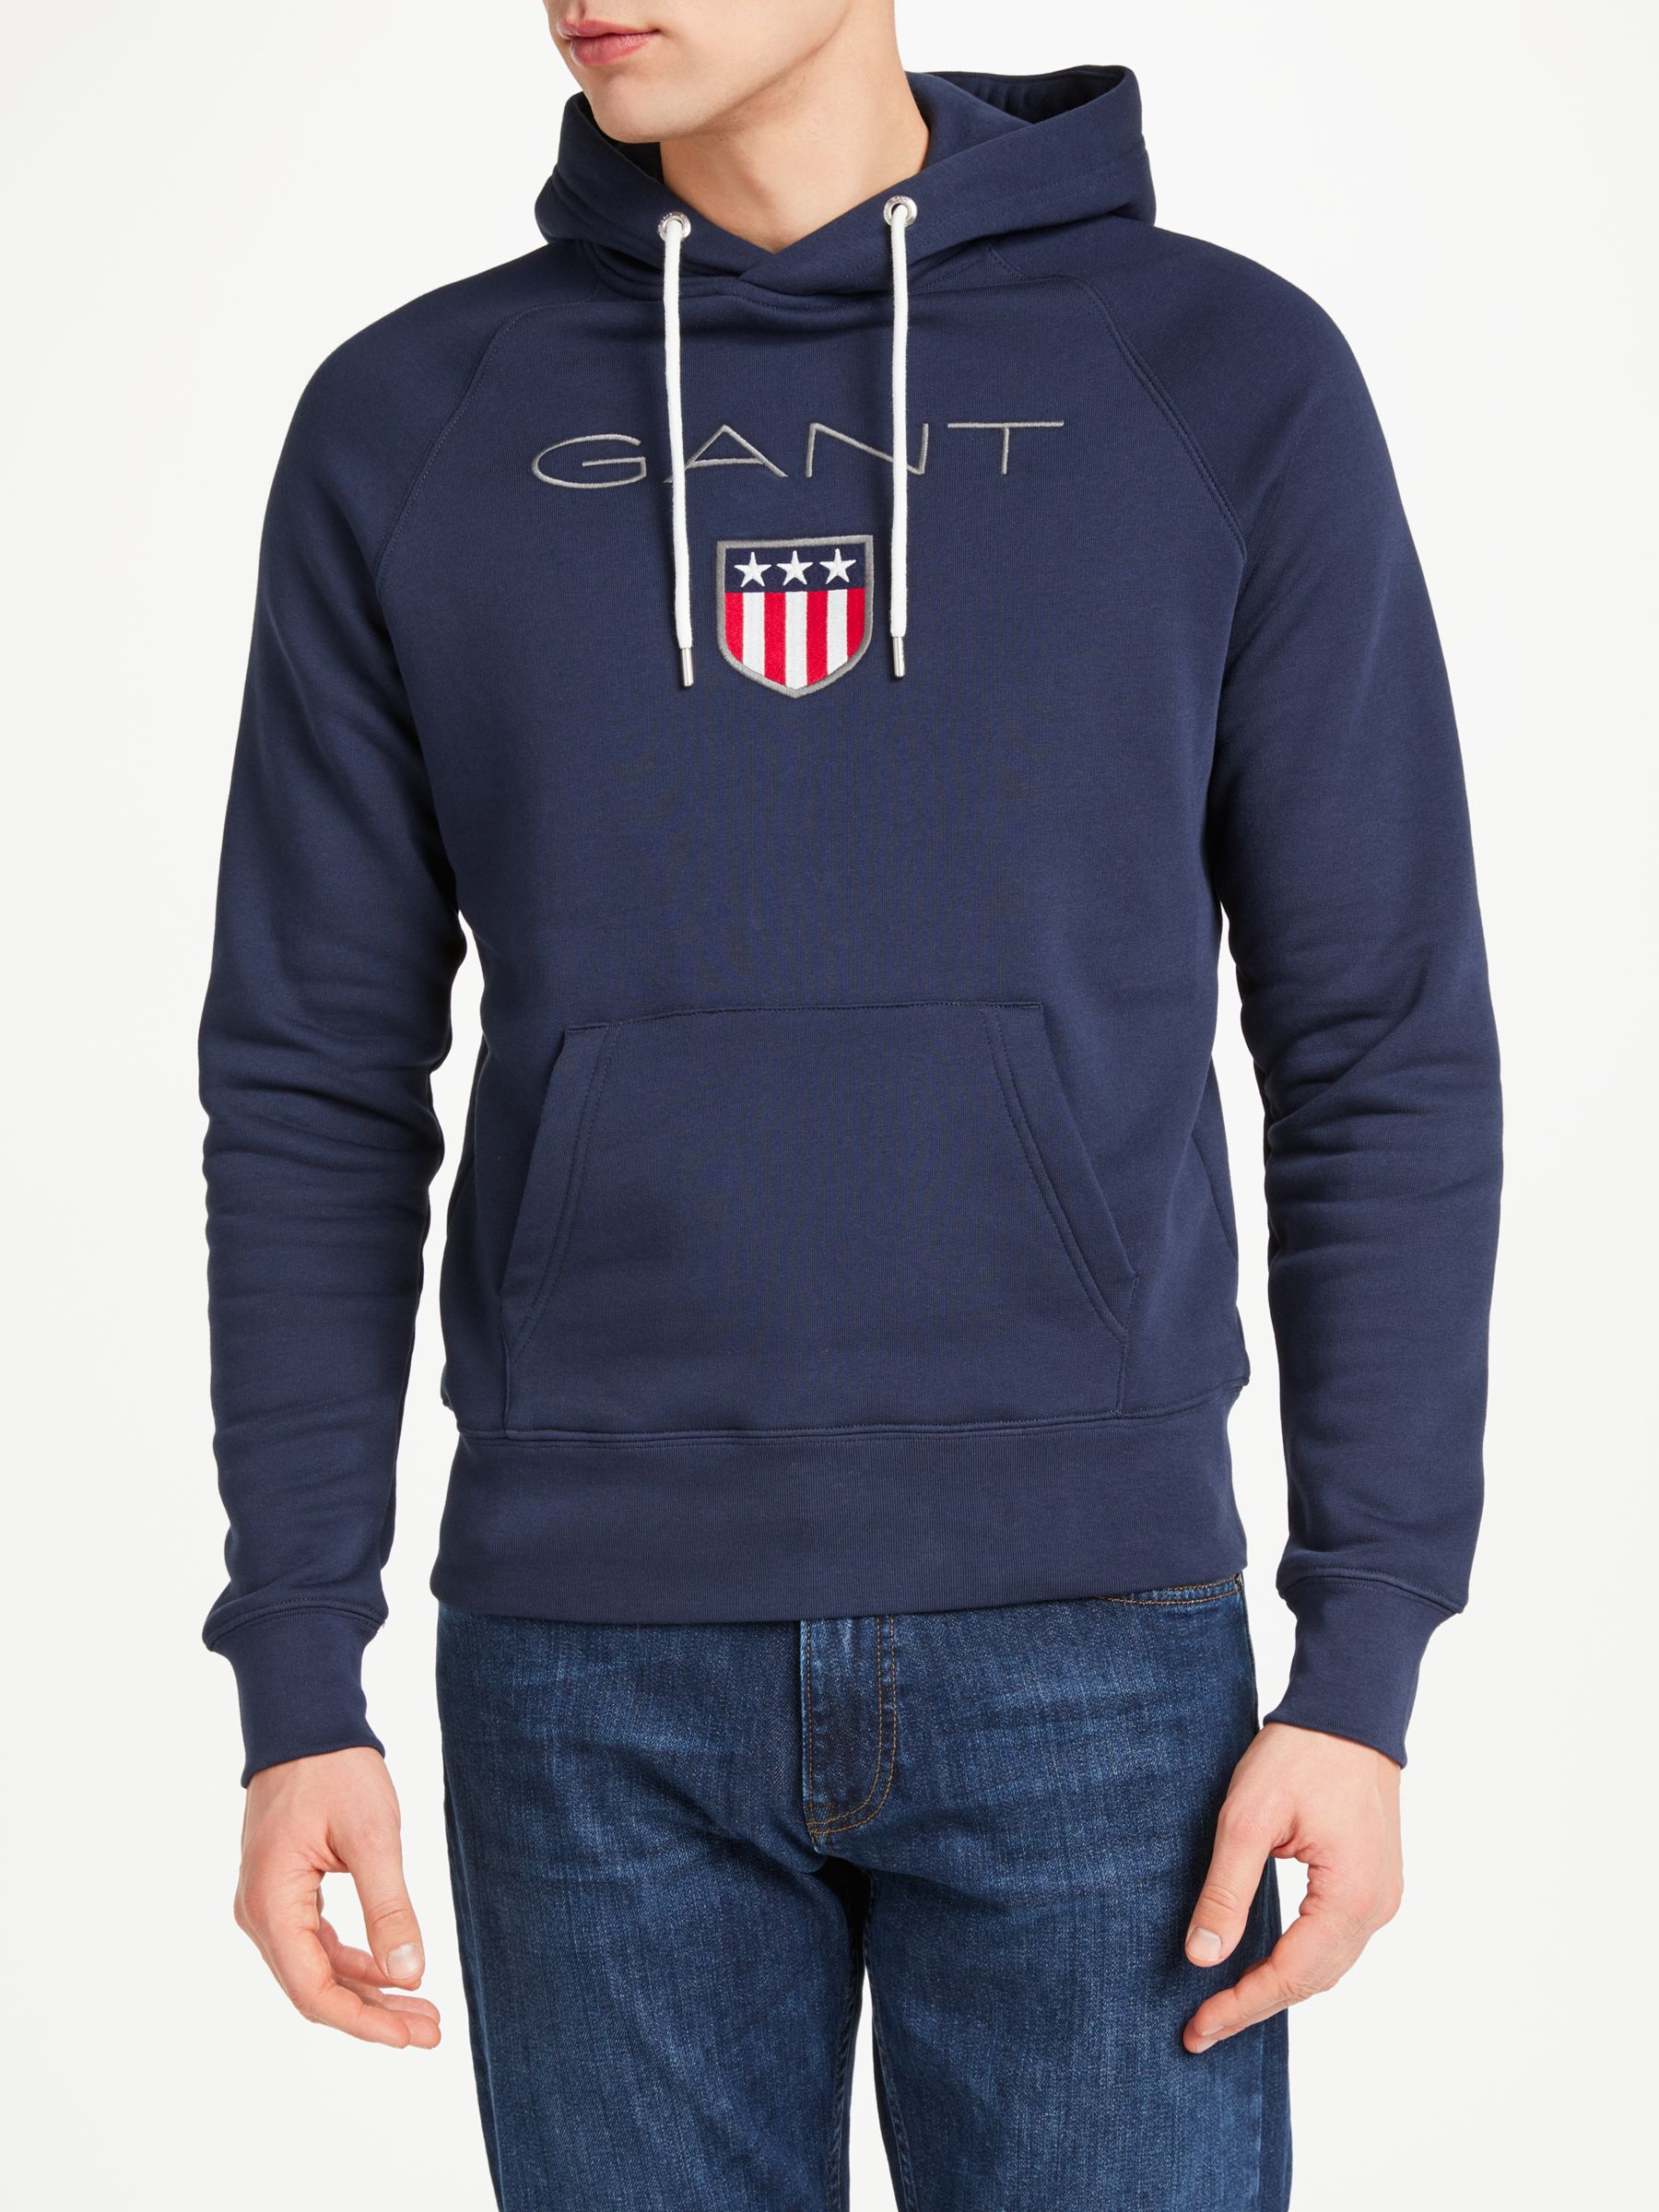 GANT Shield Embroidered Pullover Sweatshirt, Navy, S